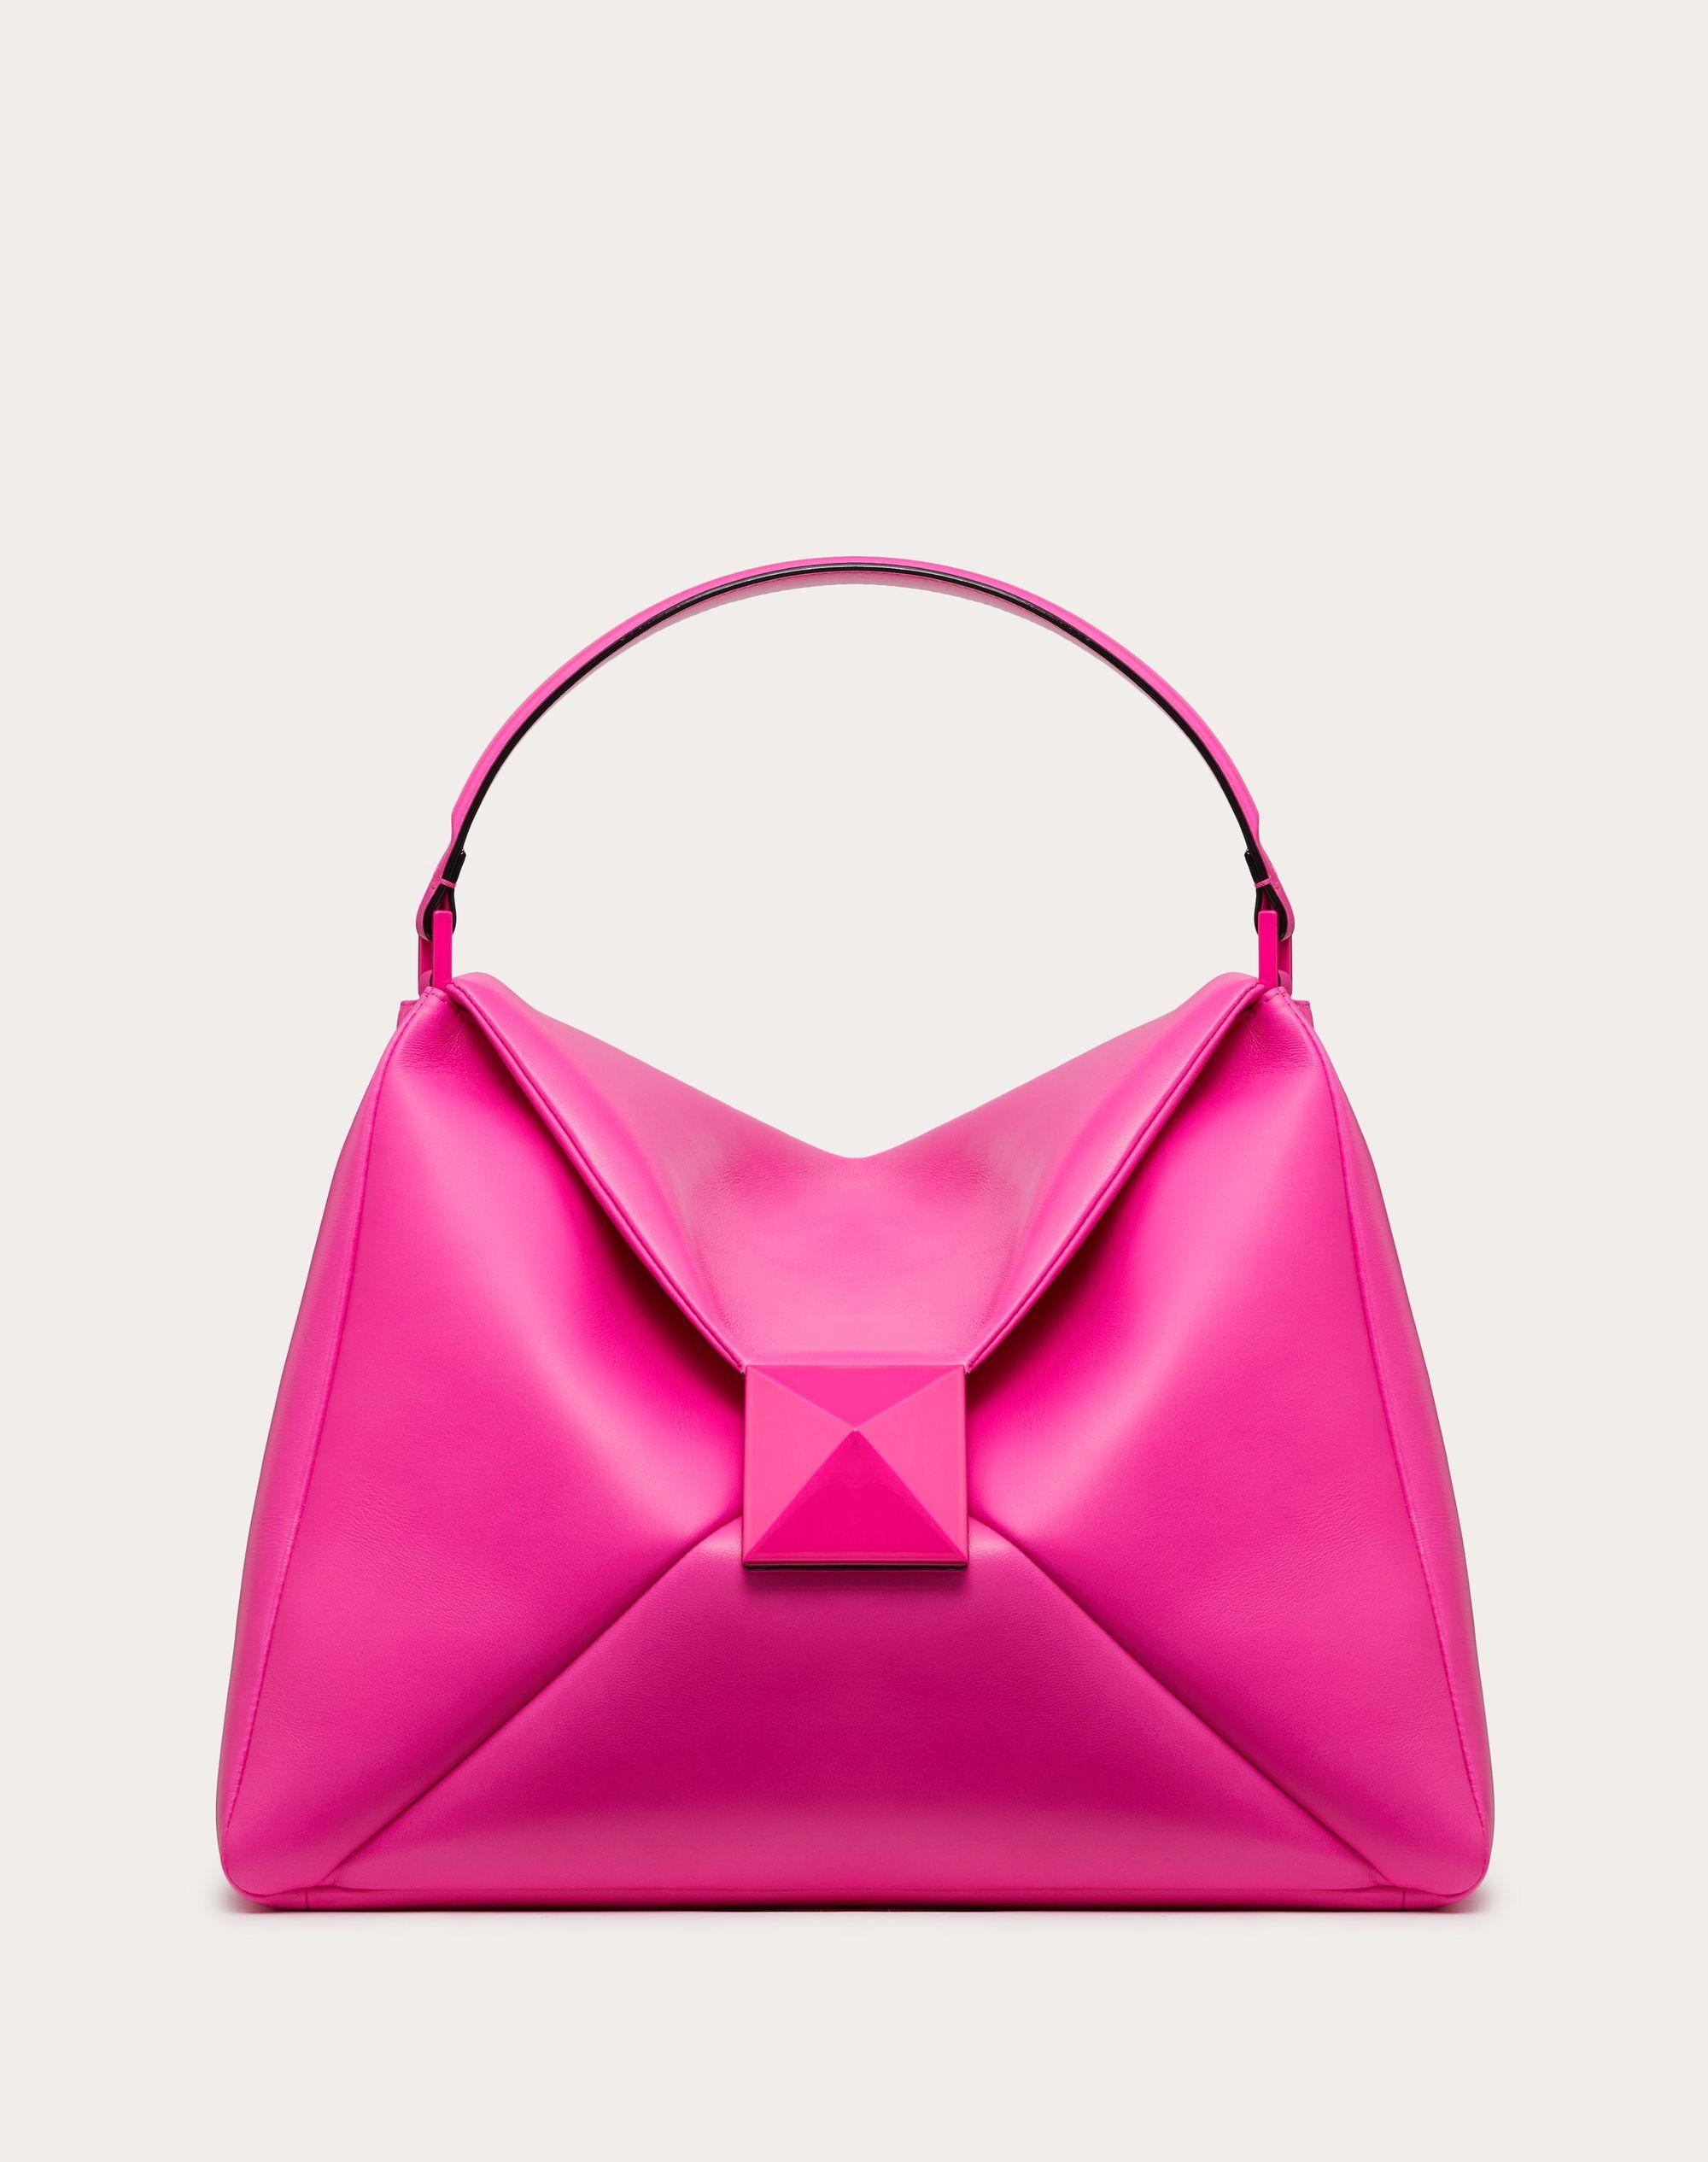 Valentino Garavani One Stud Nappa Leather Maxi Hobo Bag in Pink